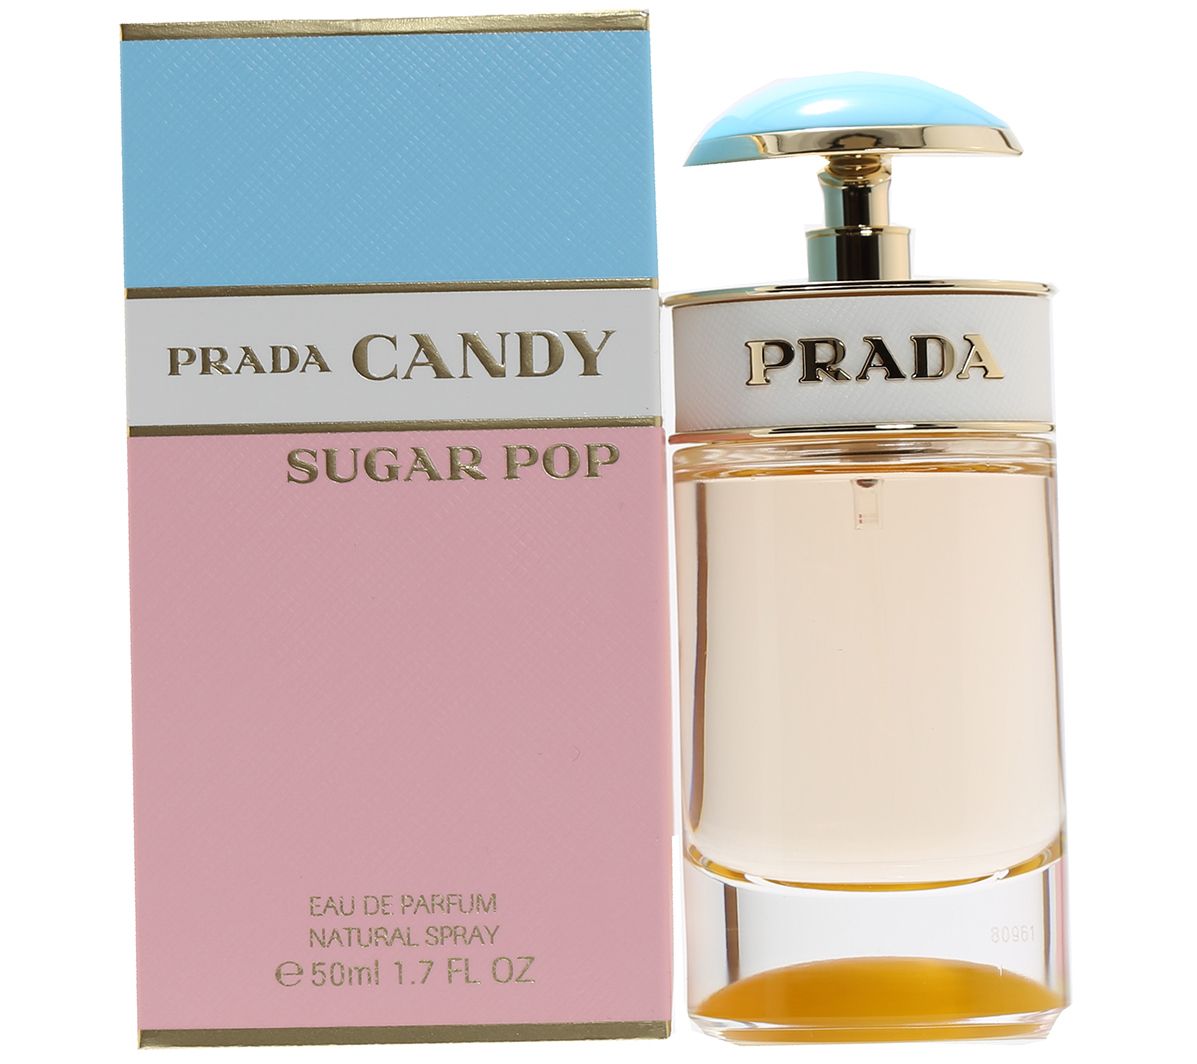 Prada Candy Sugar Pop Eau Lad Spray ies - Parfum De